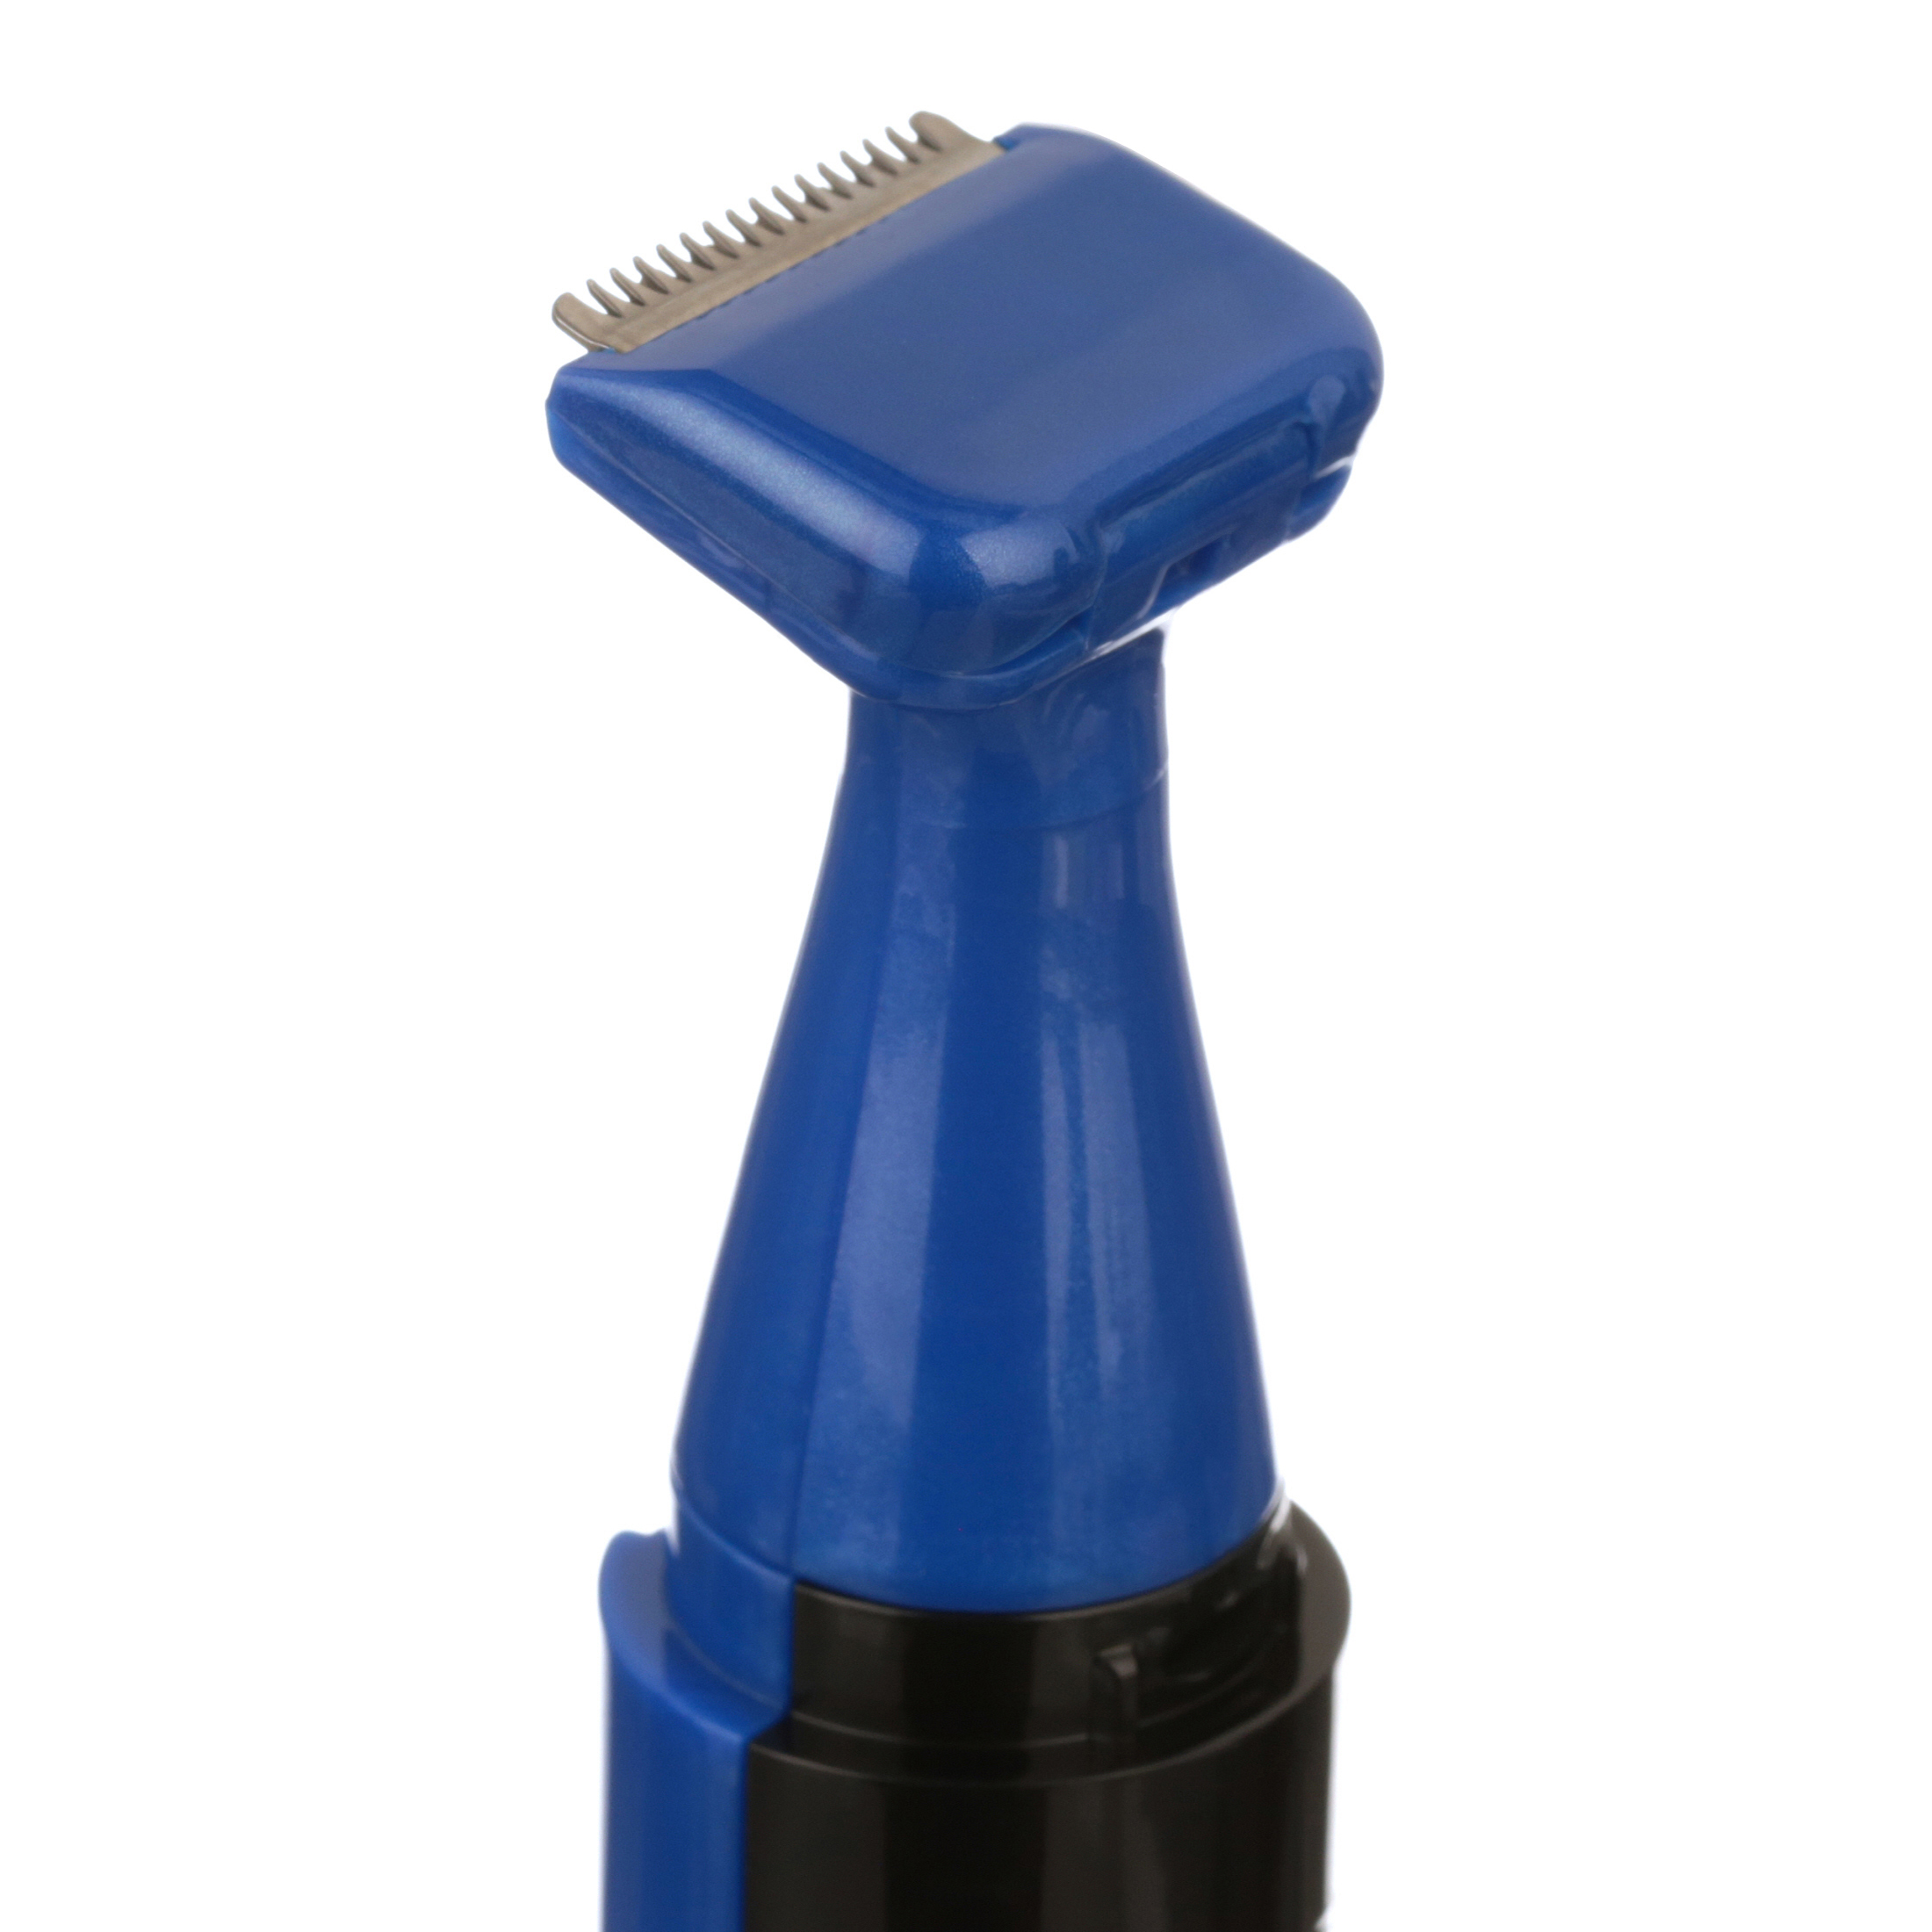 ConairMAN Comb Number Cut Haircut Kit, Blue, Model HC315N - image 4 of 11